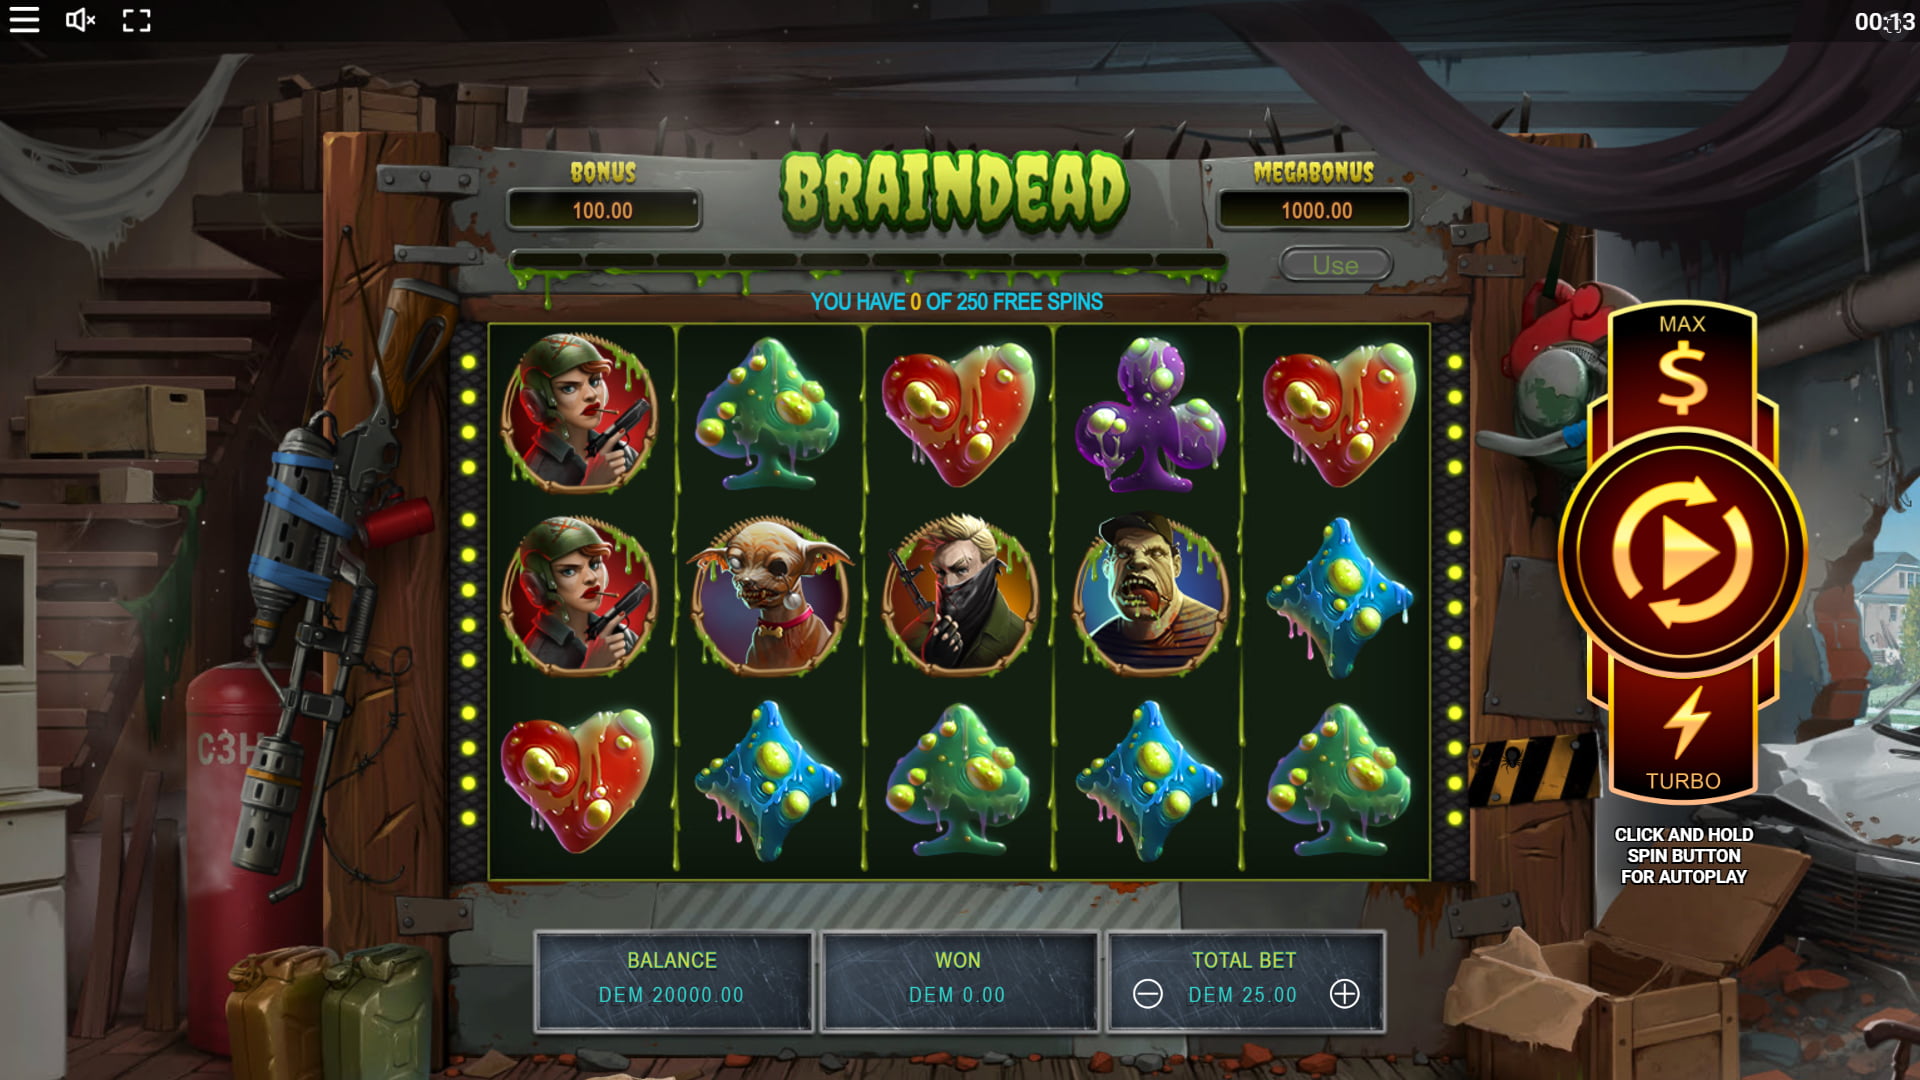 Braindead By Mancala Gaming